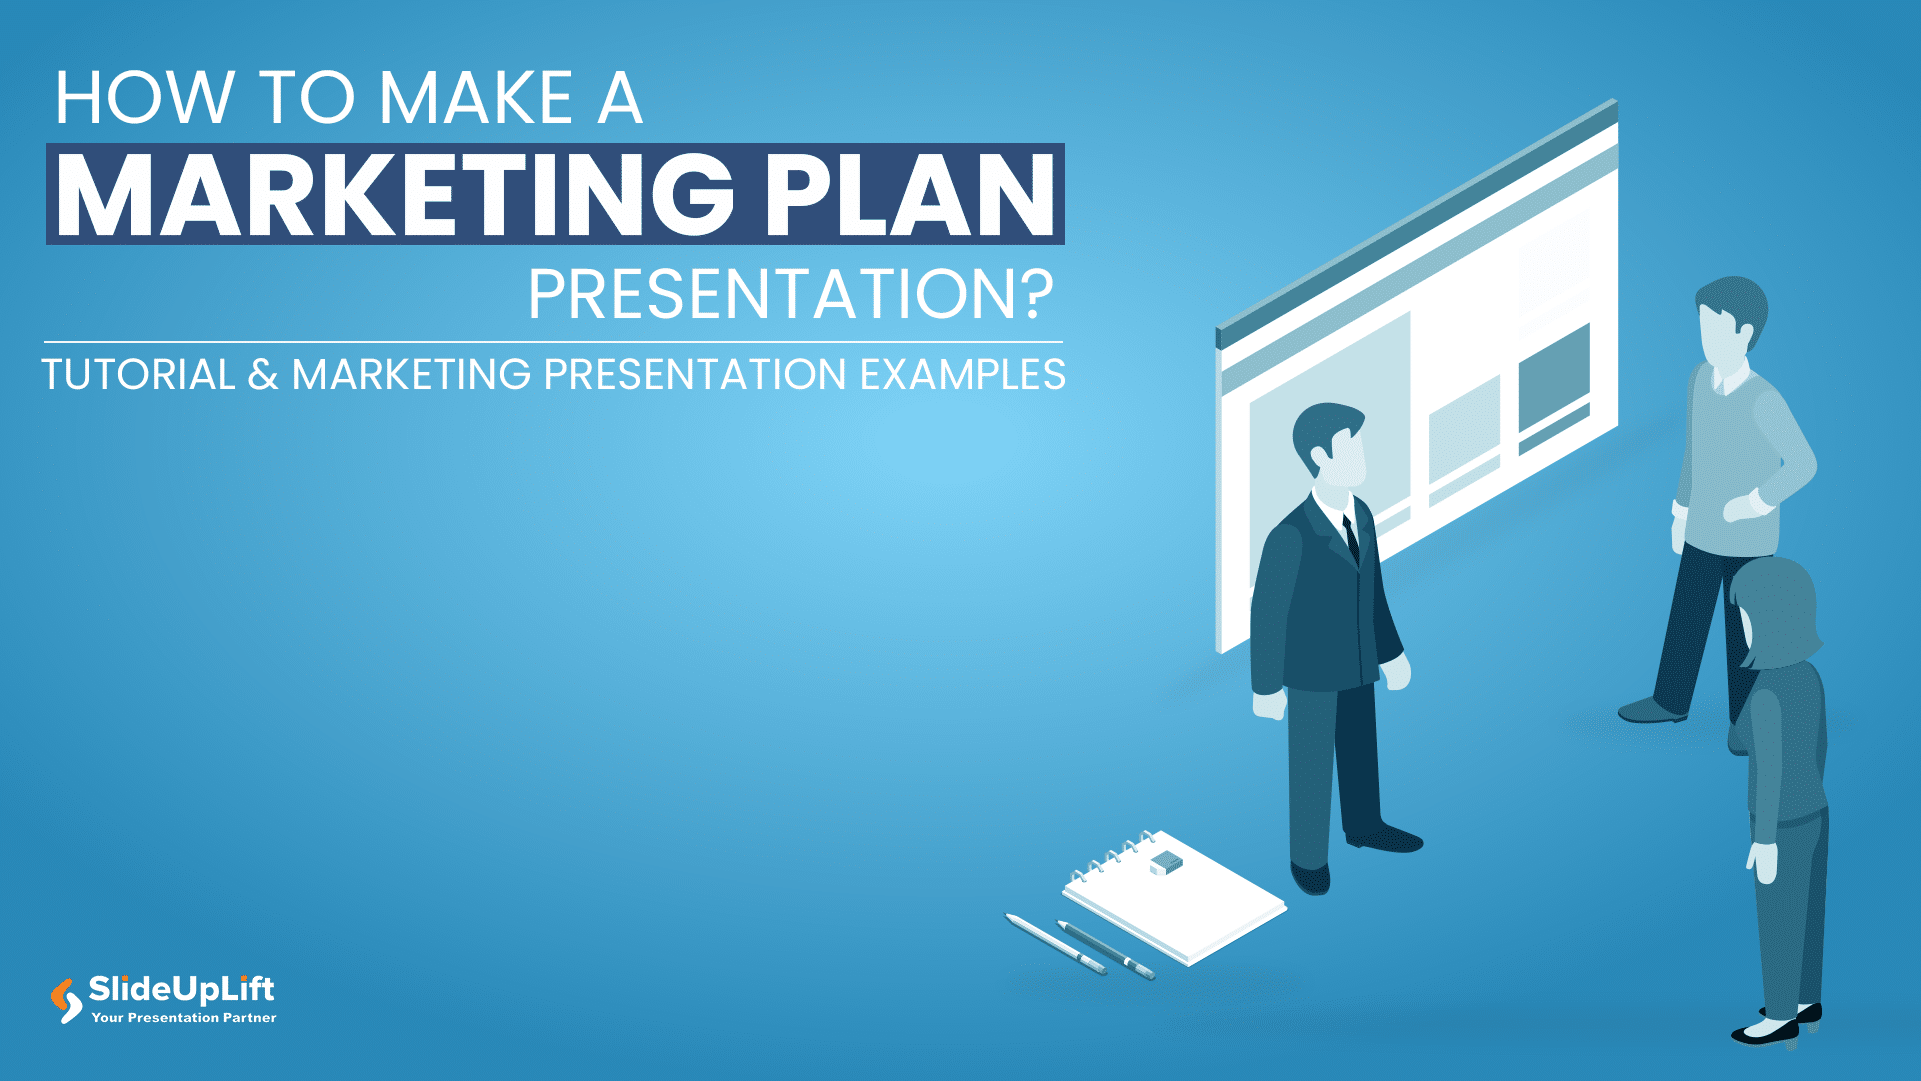 business financial plan presentation